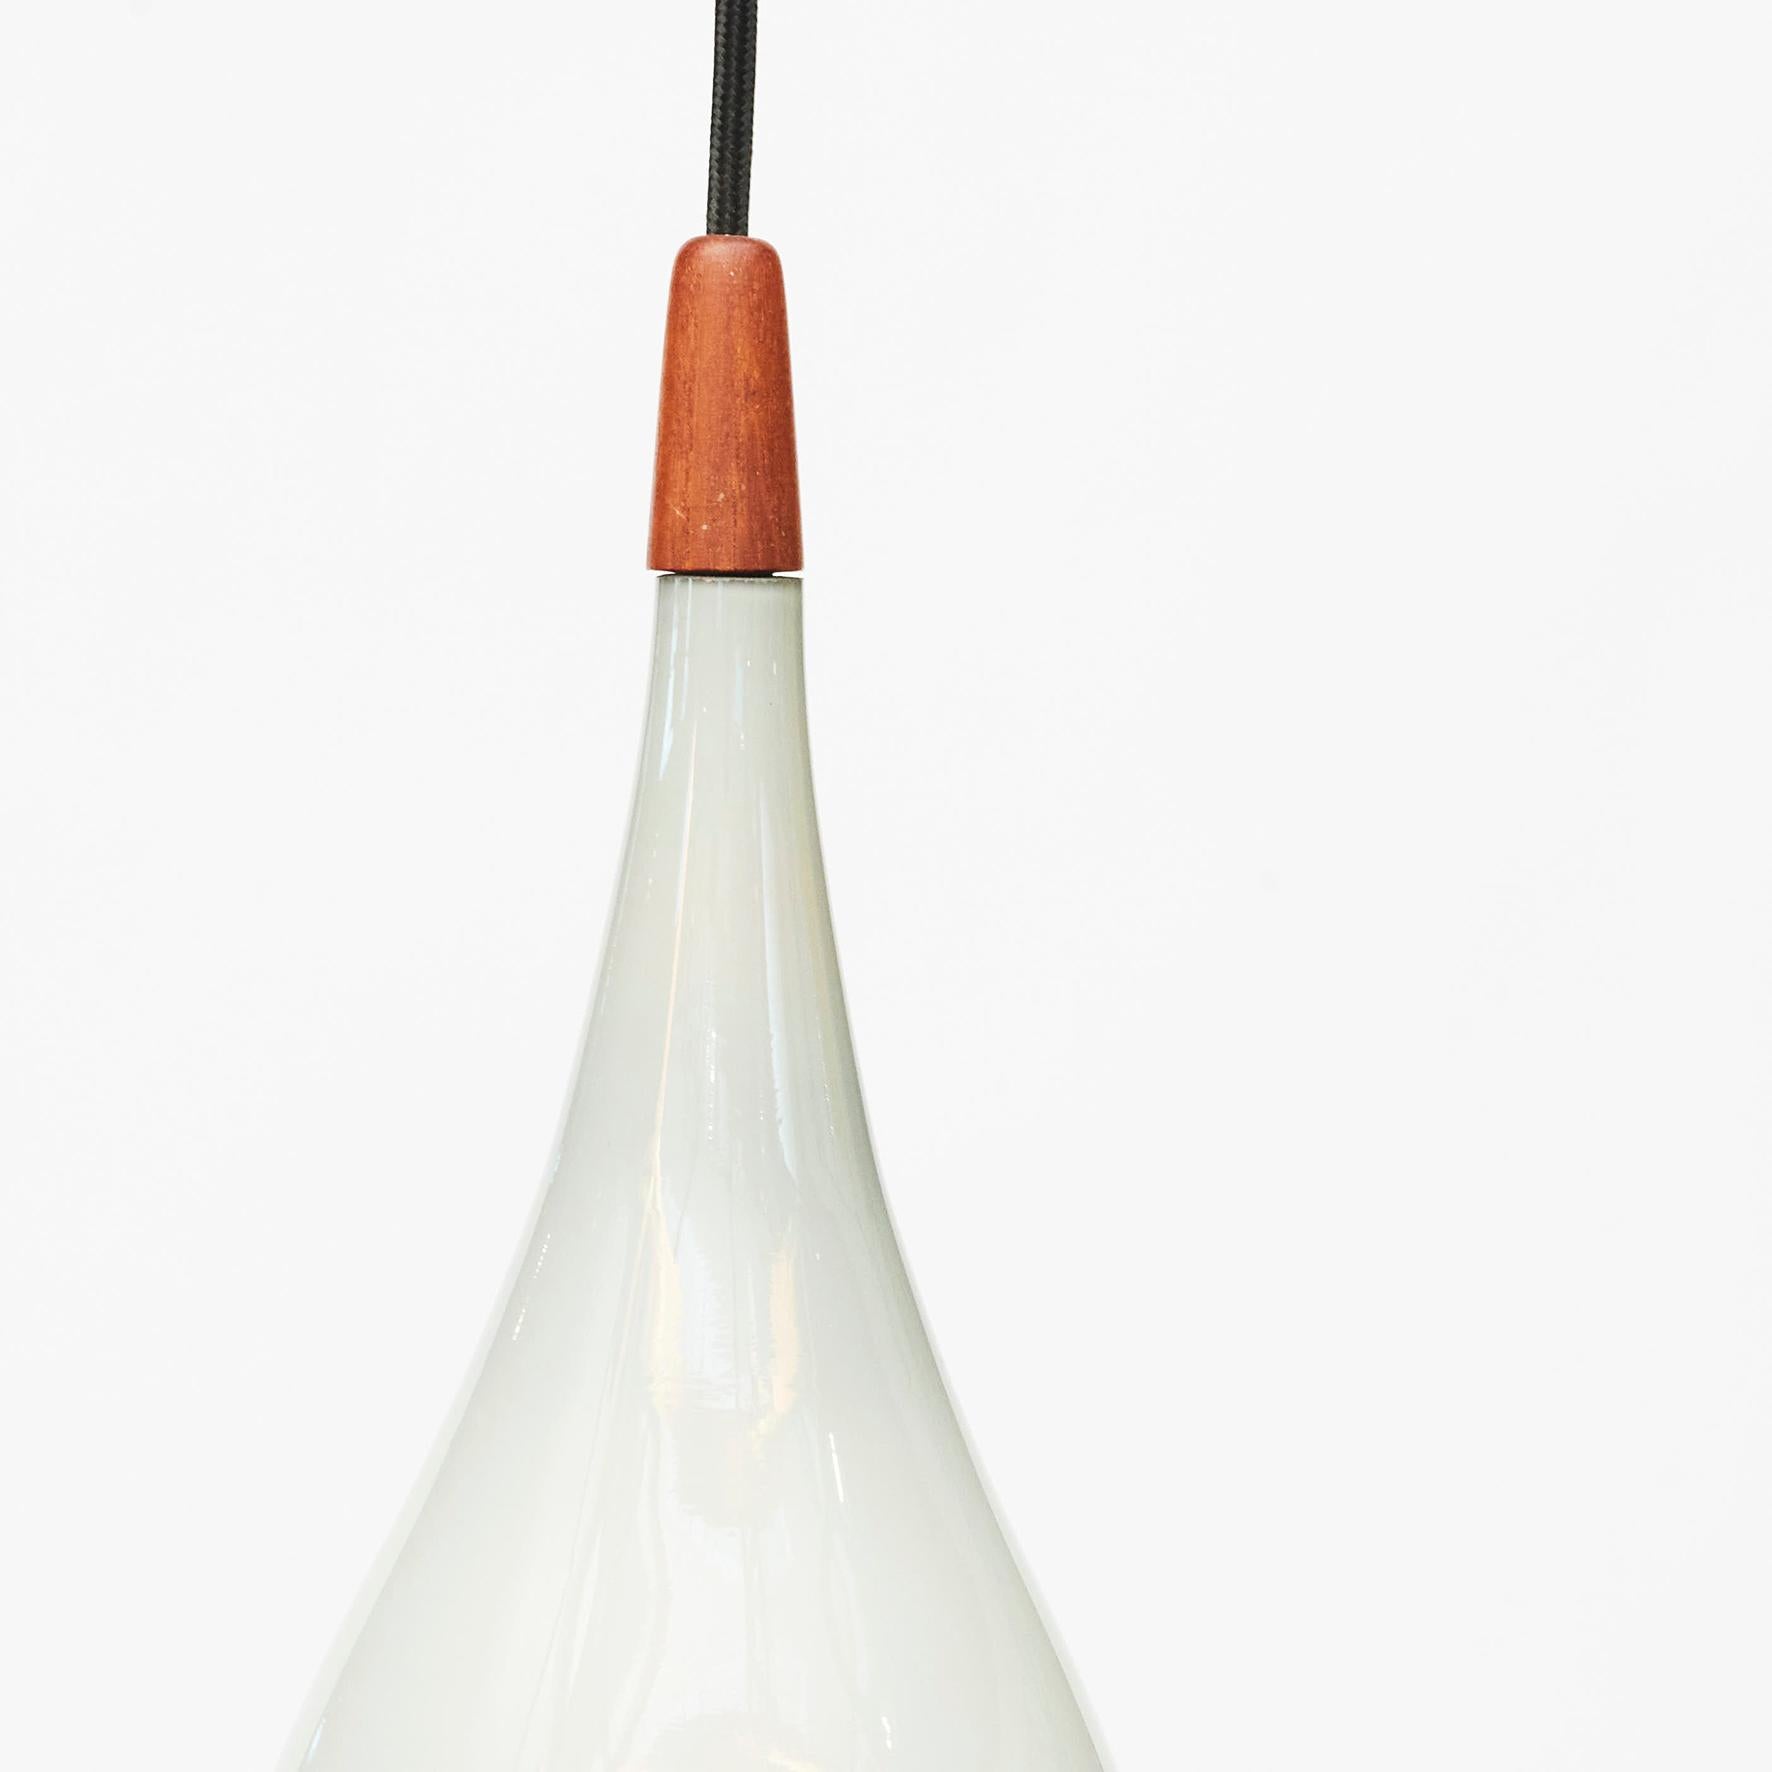 European Glass and Teak  Pendant Light, Danish Design, Holmegaard, circa 1955 For Sale